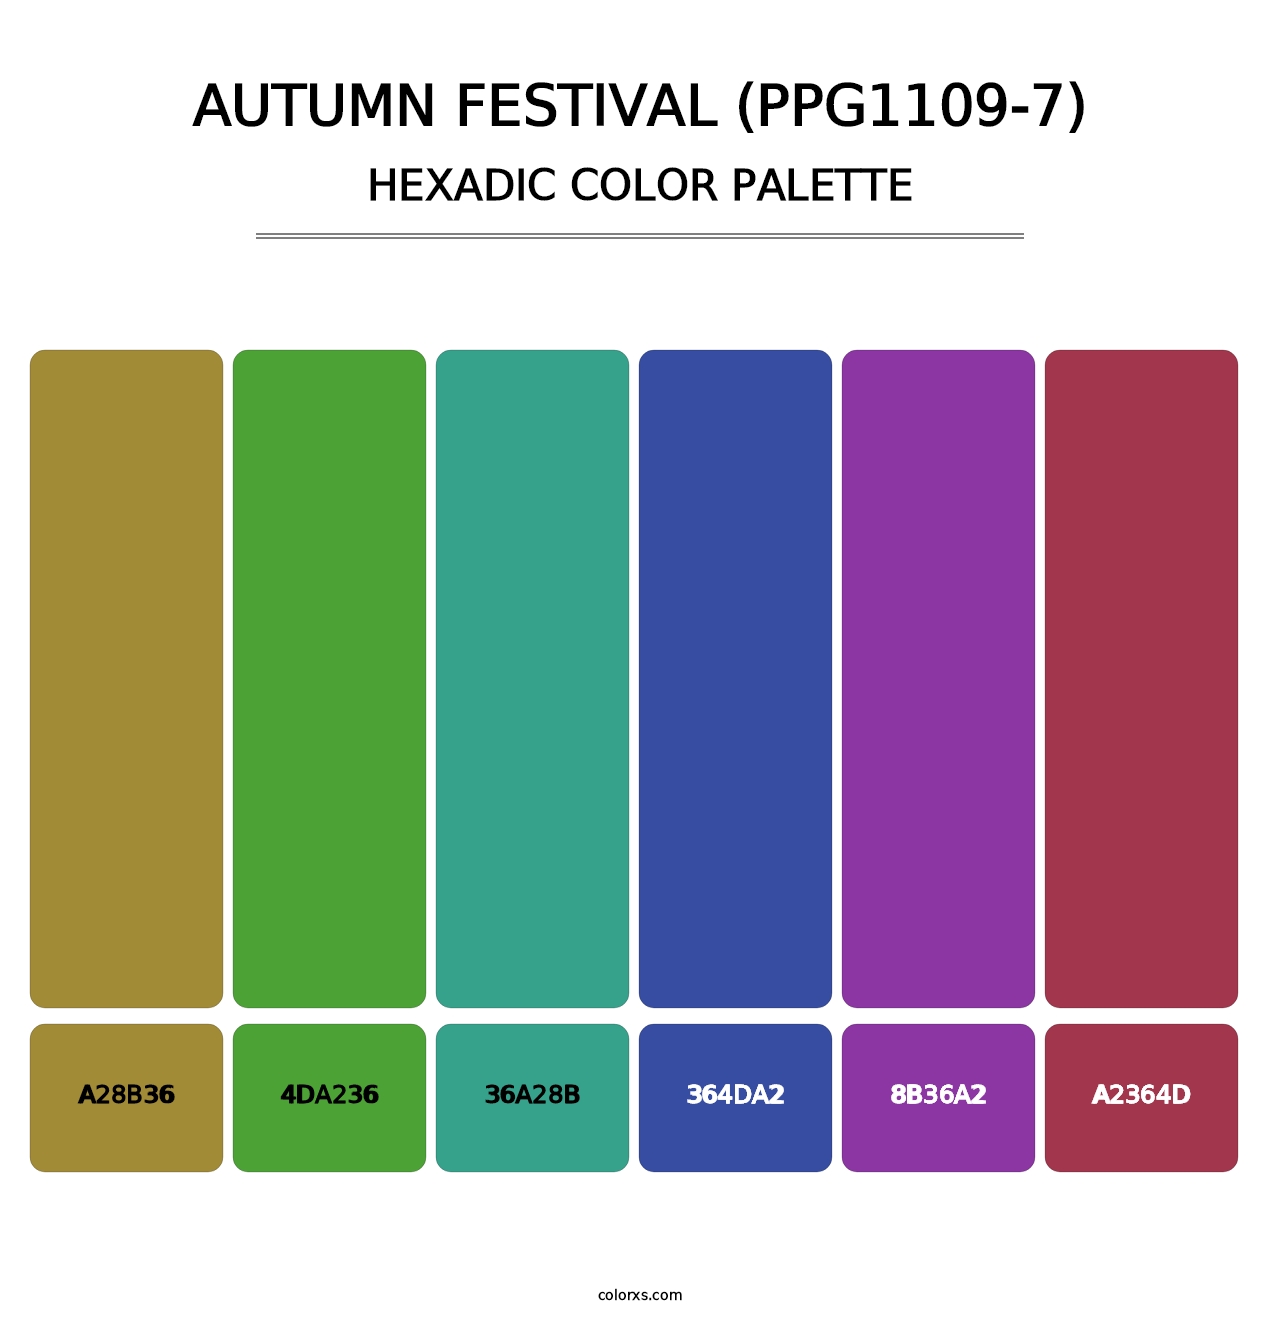 Autumn Festival (PPG1109-7) - Hexadic Color Palette